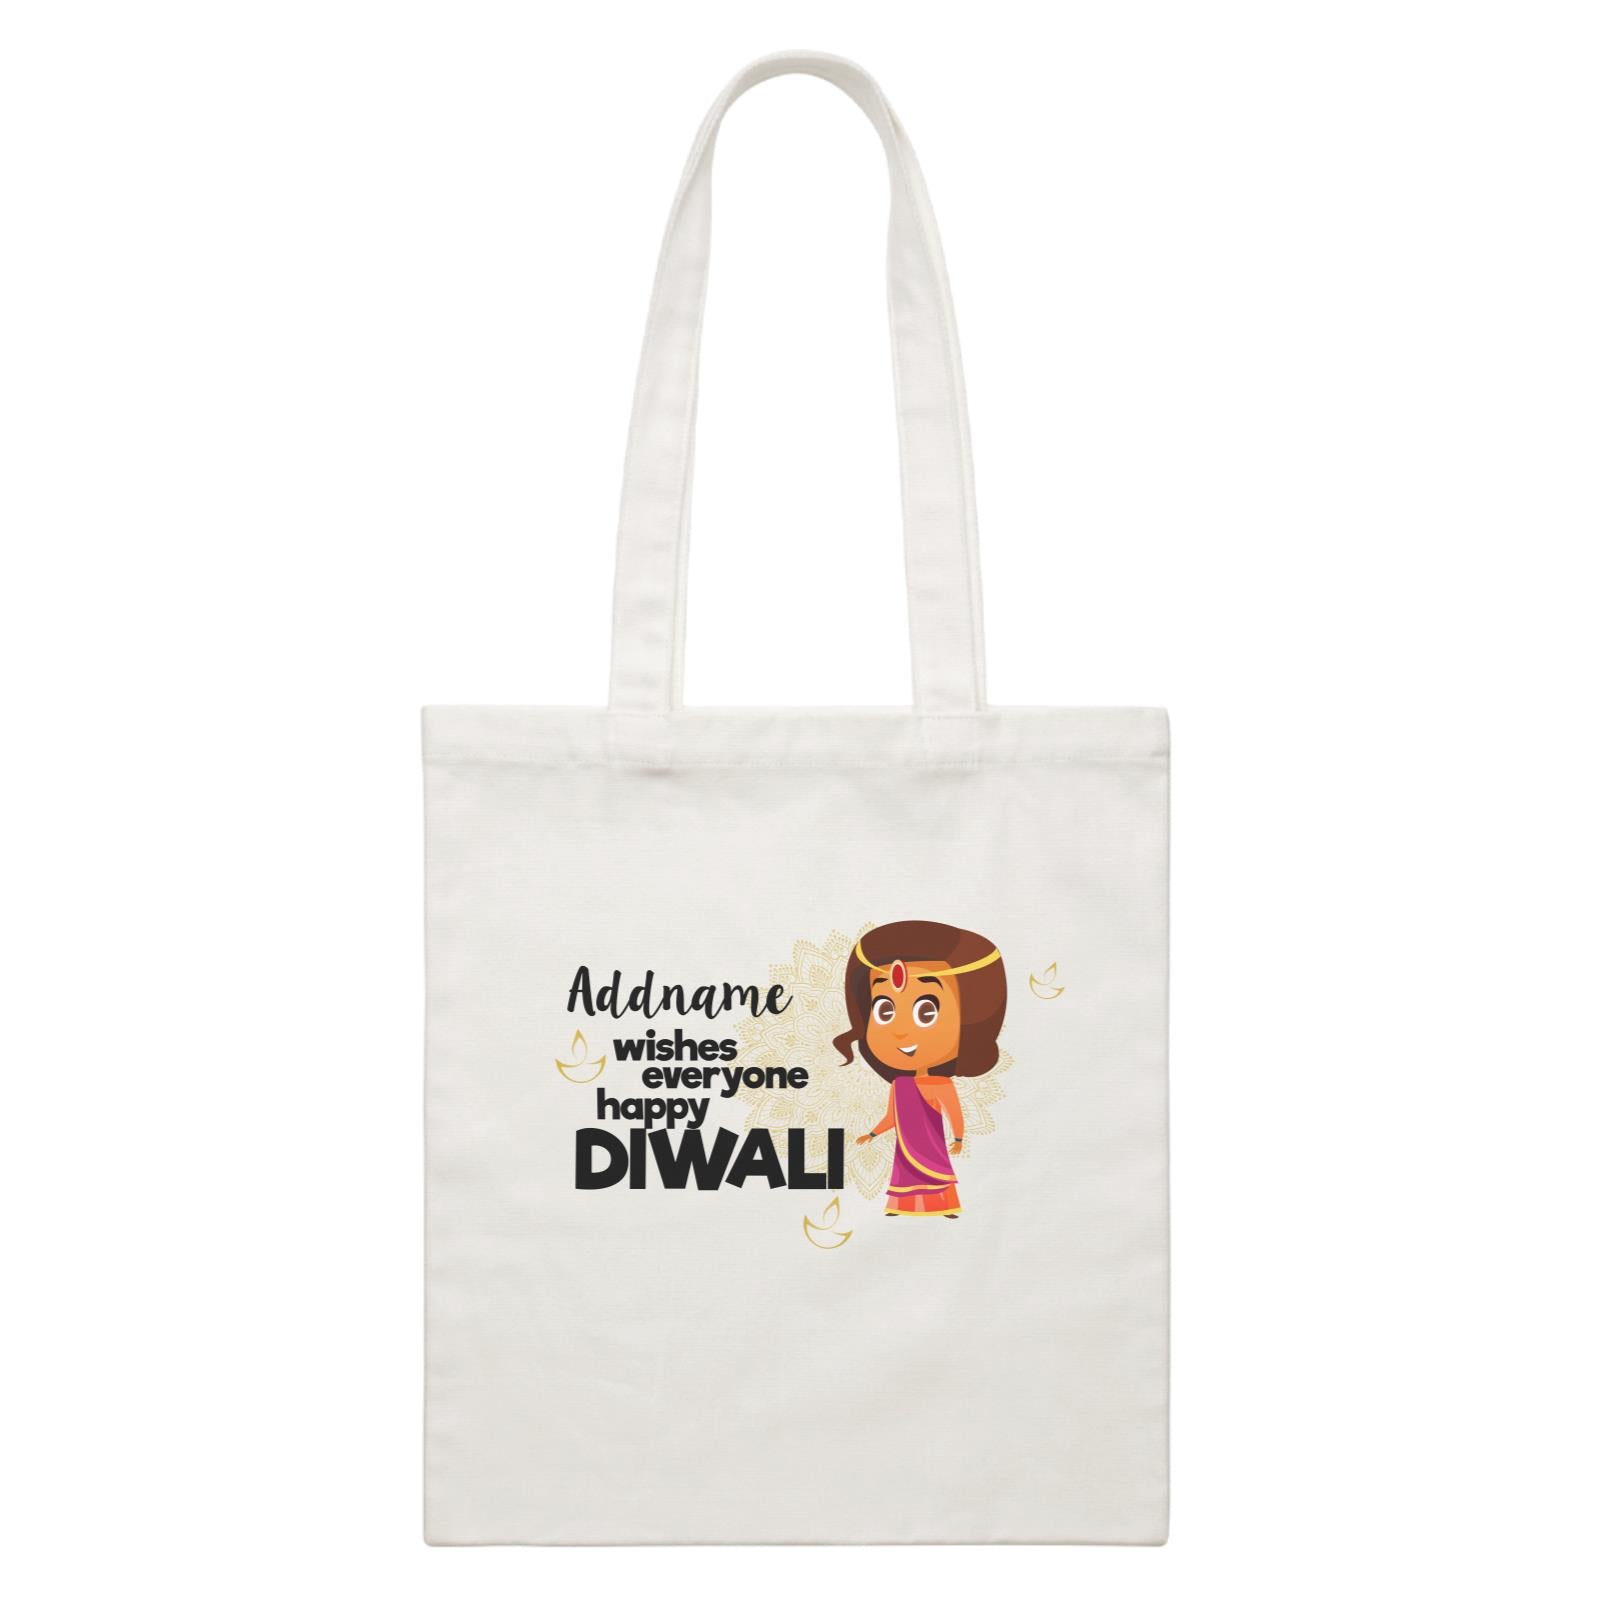 Cute Girl Wishes Everyone Happy Diwali Addname White Canvas Bag